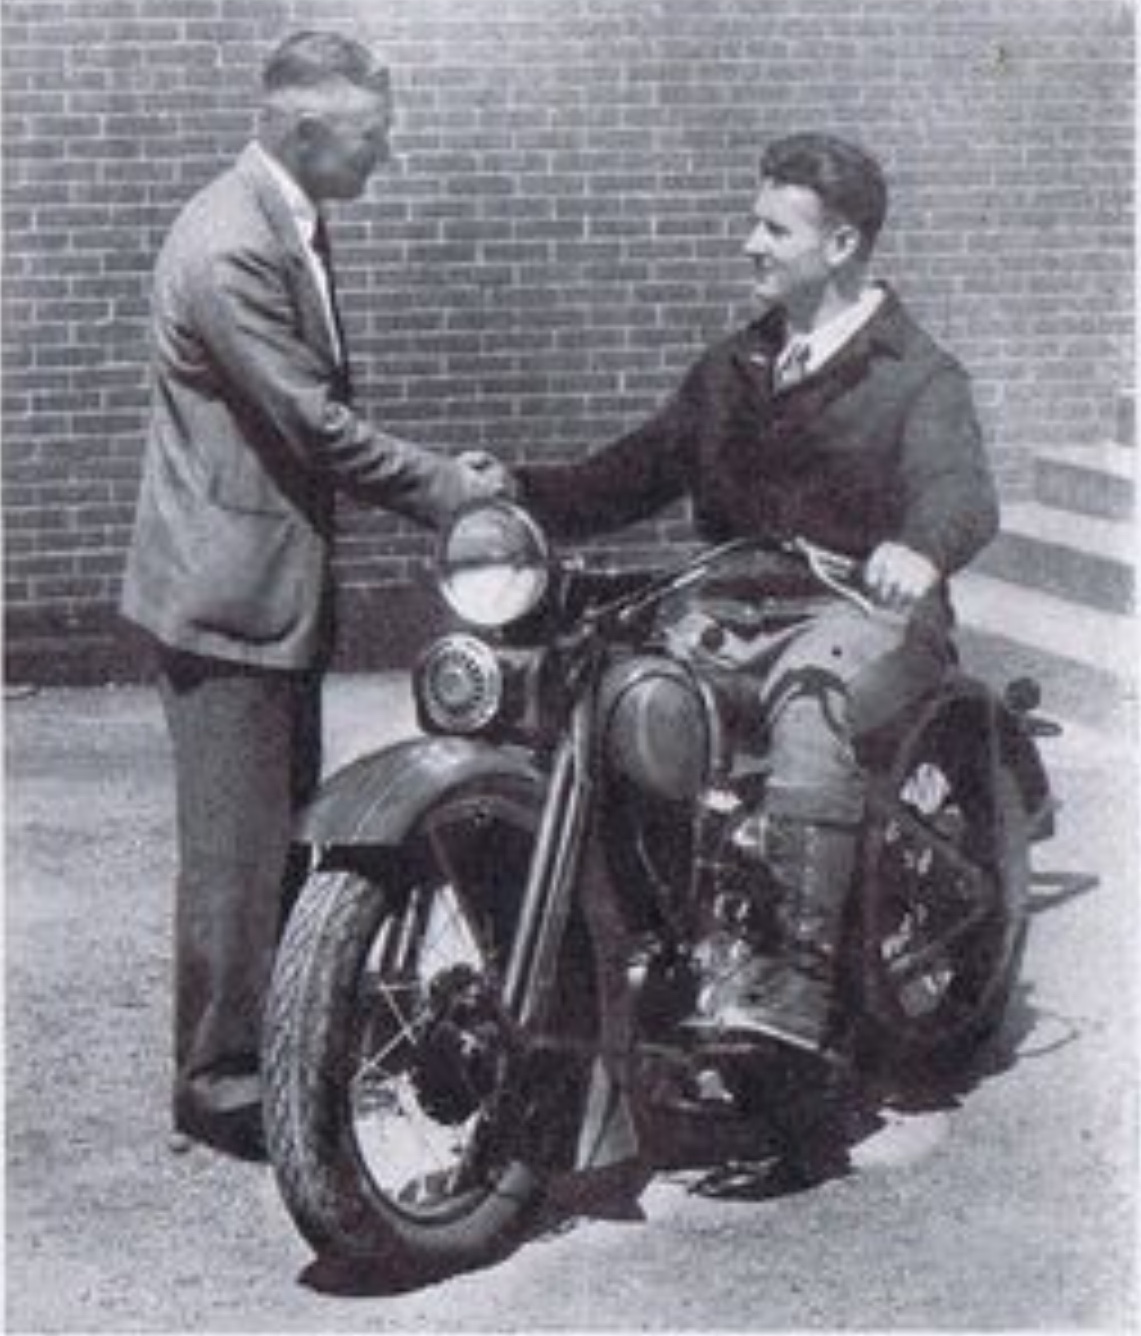 1932 - Harley-Davidson - William S. Harley - R45